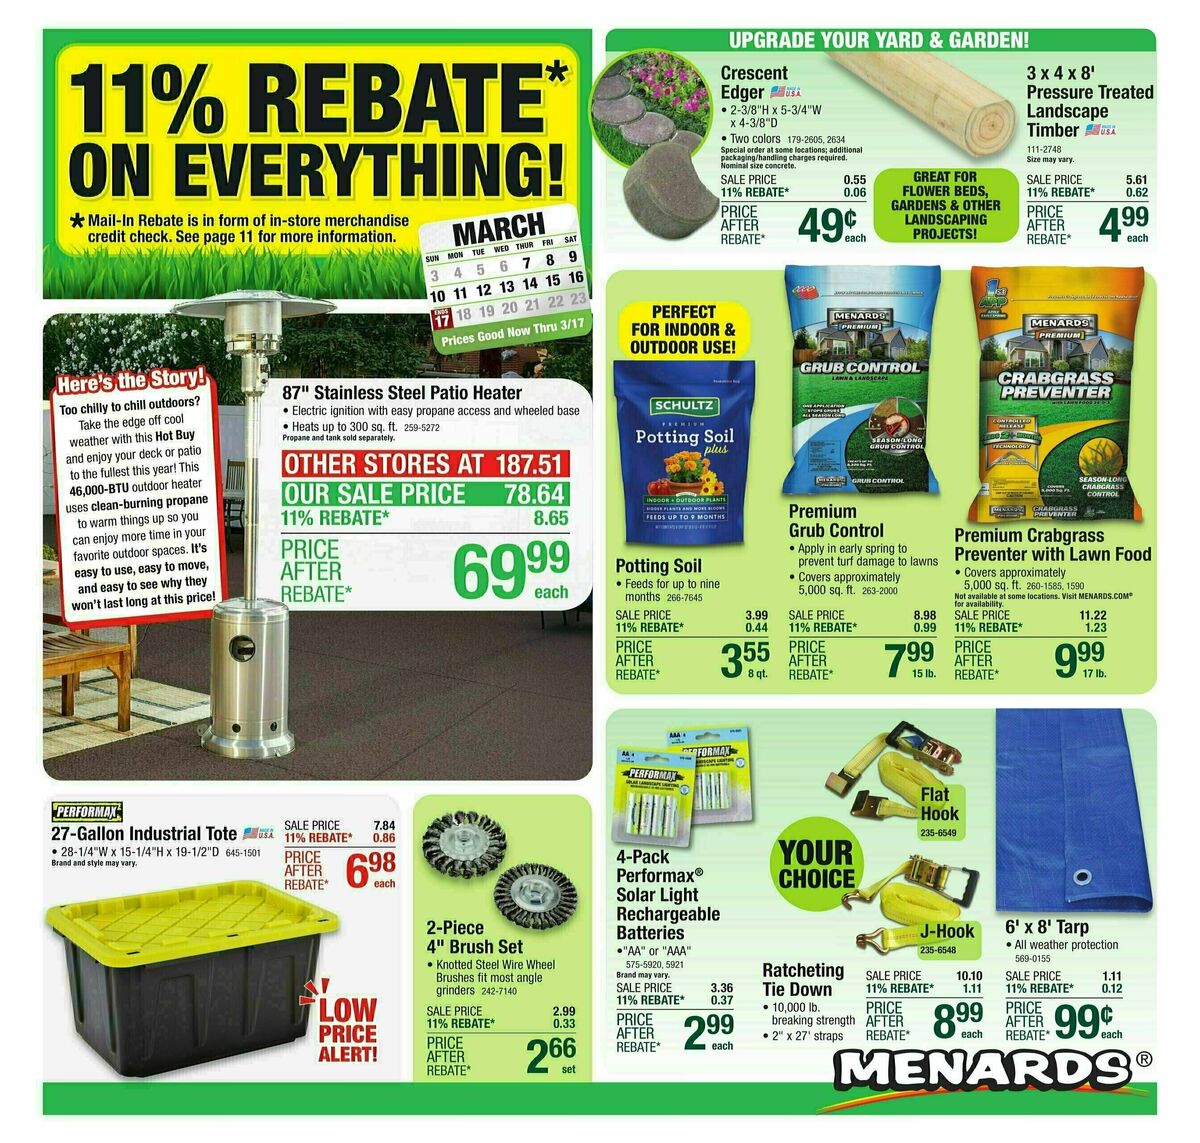 Menards 11% Rebate Sale Weekly Ad from March 6